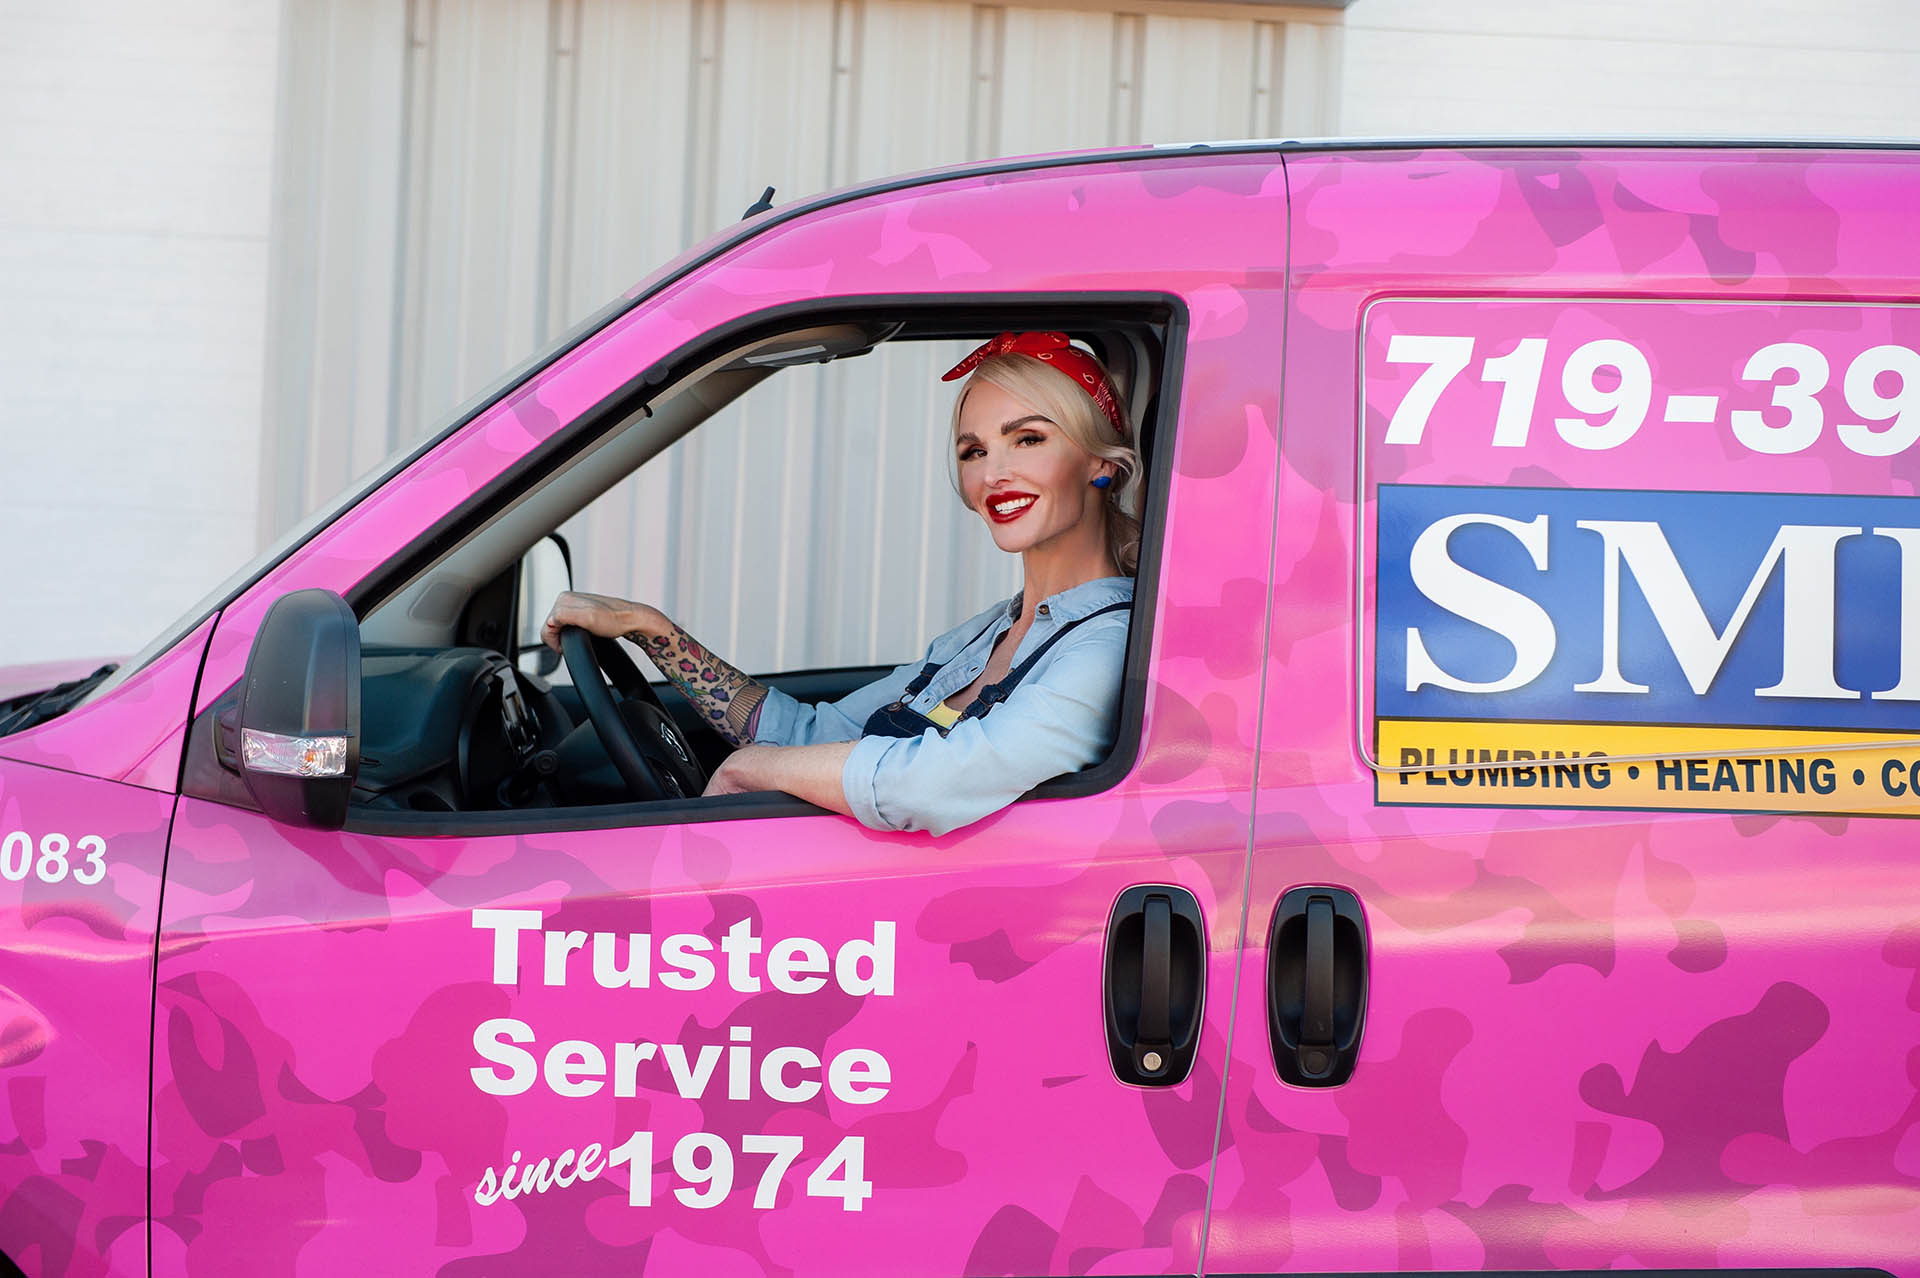 Eva driving pink truck